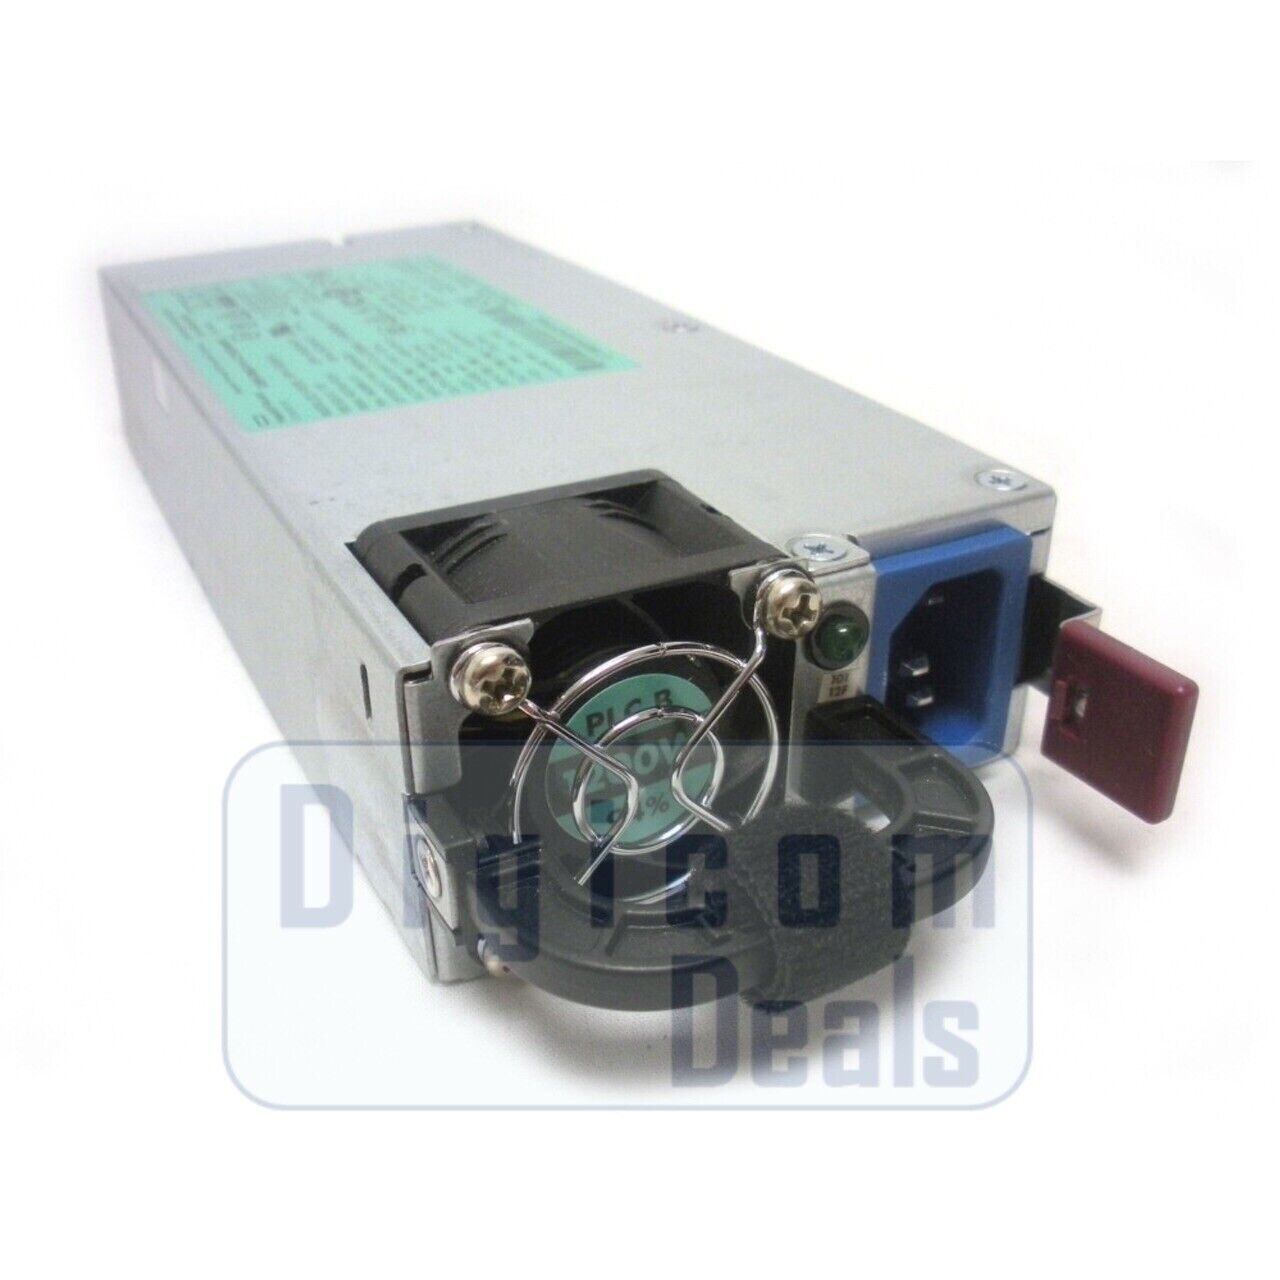 656364-B21 660185-001 HPE 1200W Common Slot Platinum Plus Hot Plug Power Supply